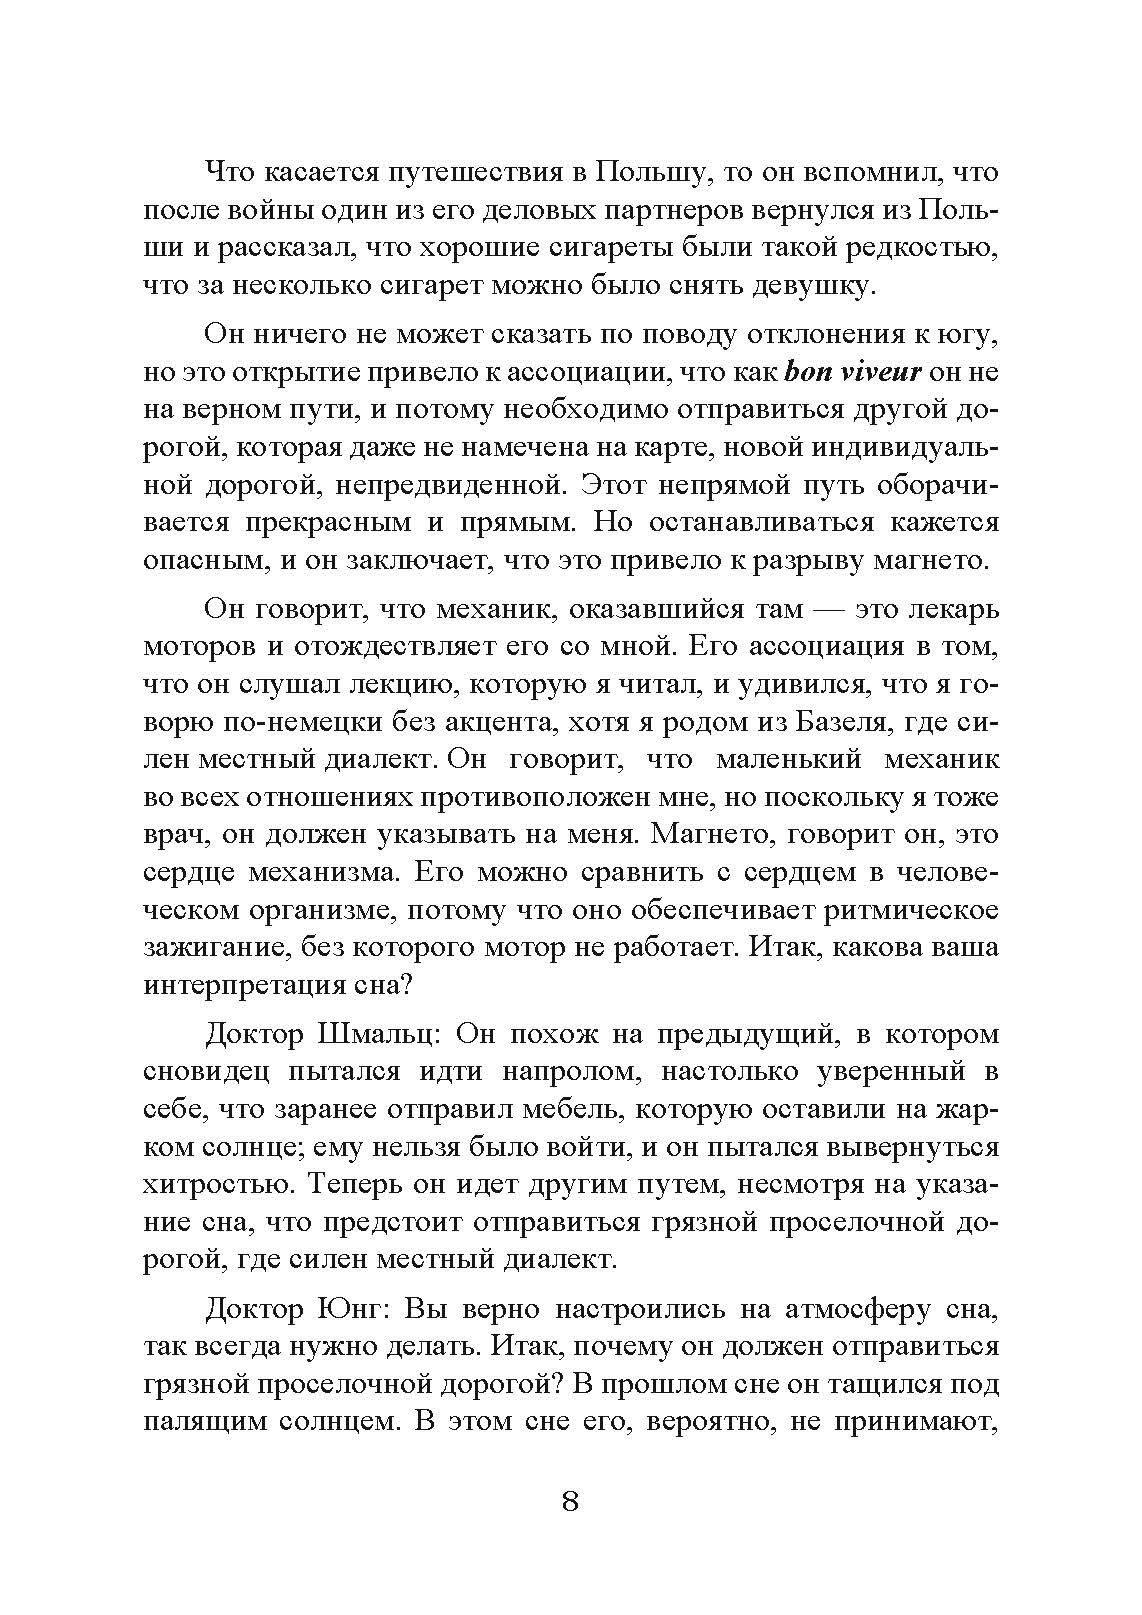 Анализ сновидений. Семинары (осень 1929 г. — лето 1930 г.). Автор — Карл Густав Юнг. 